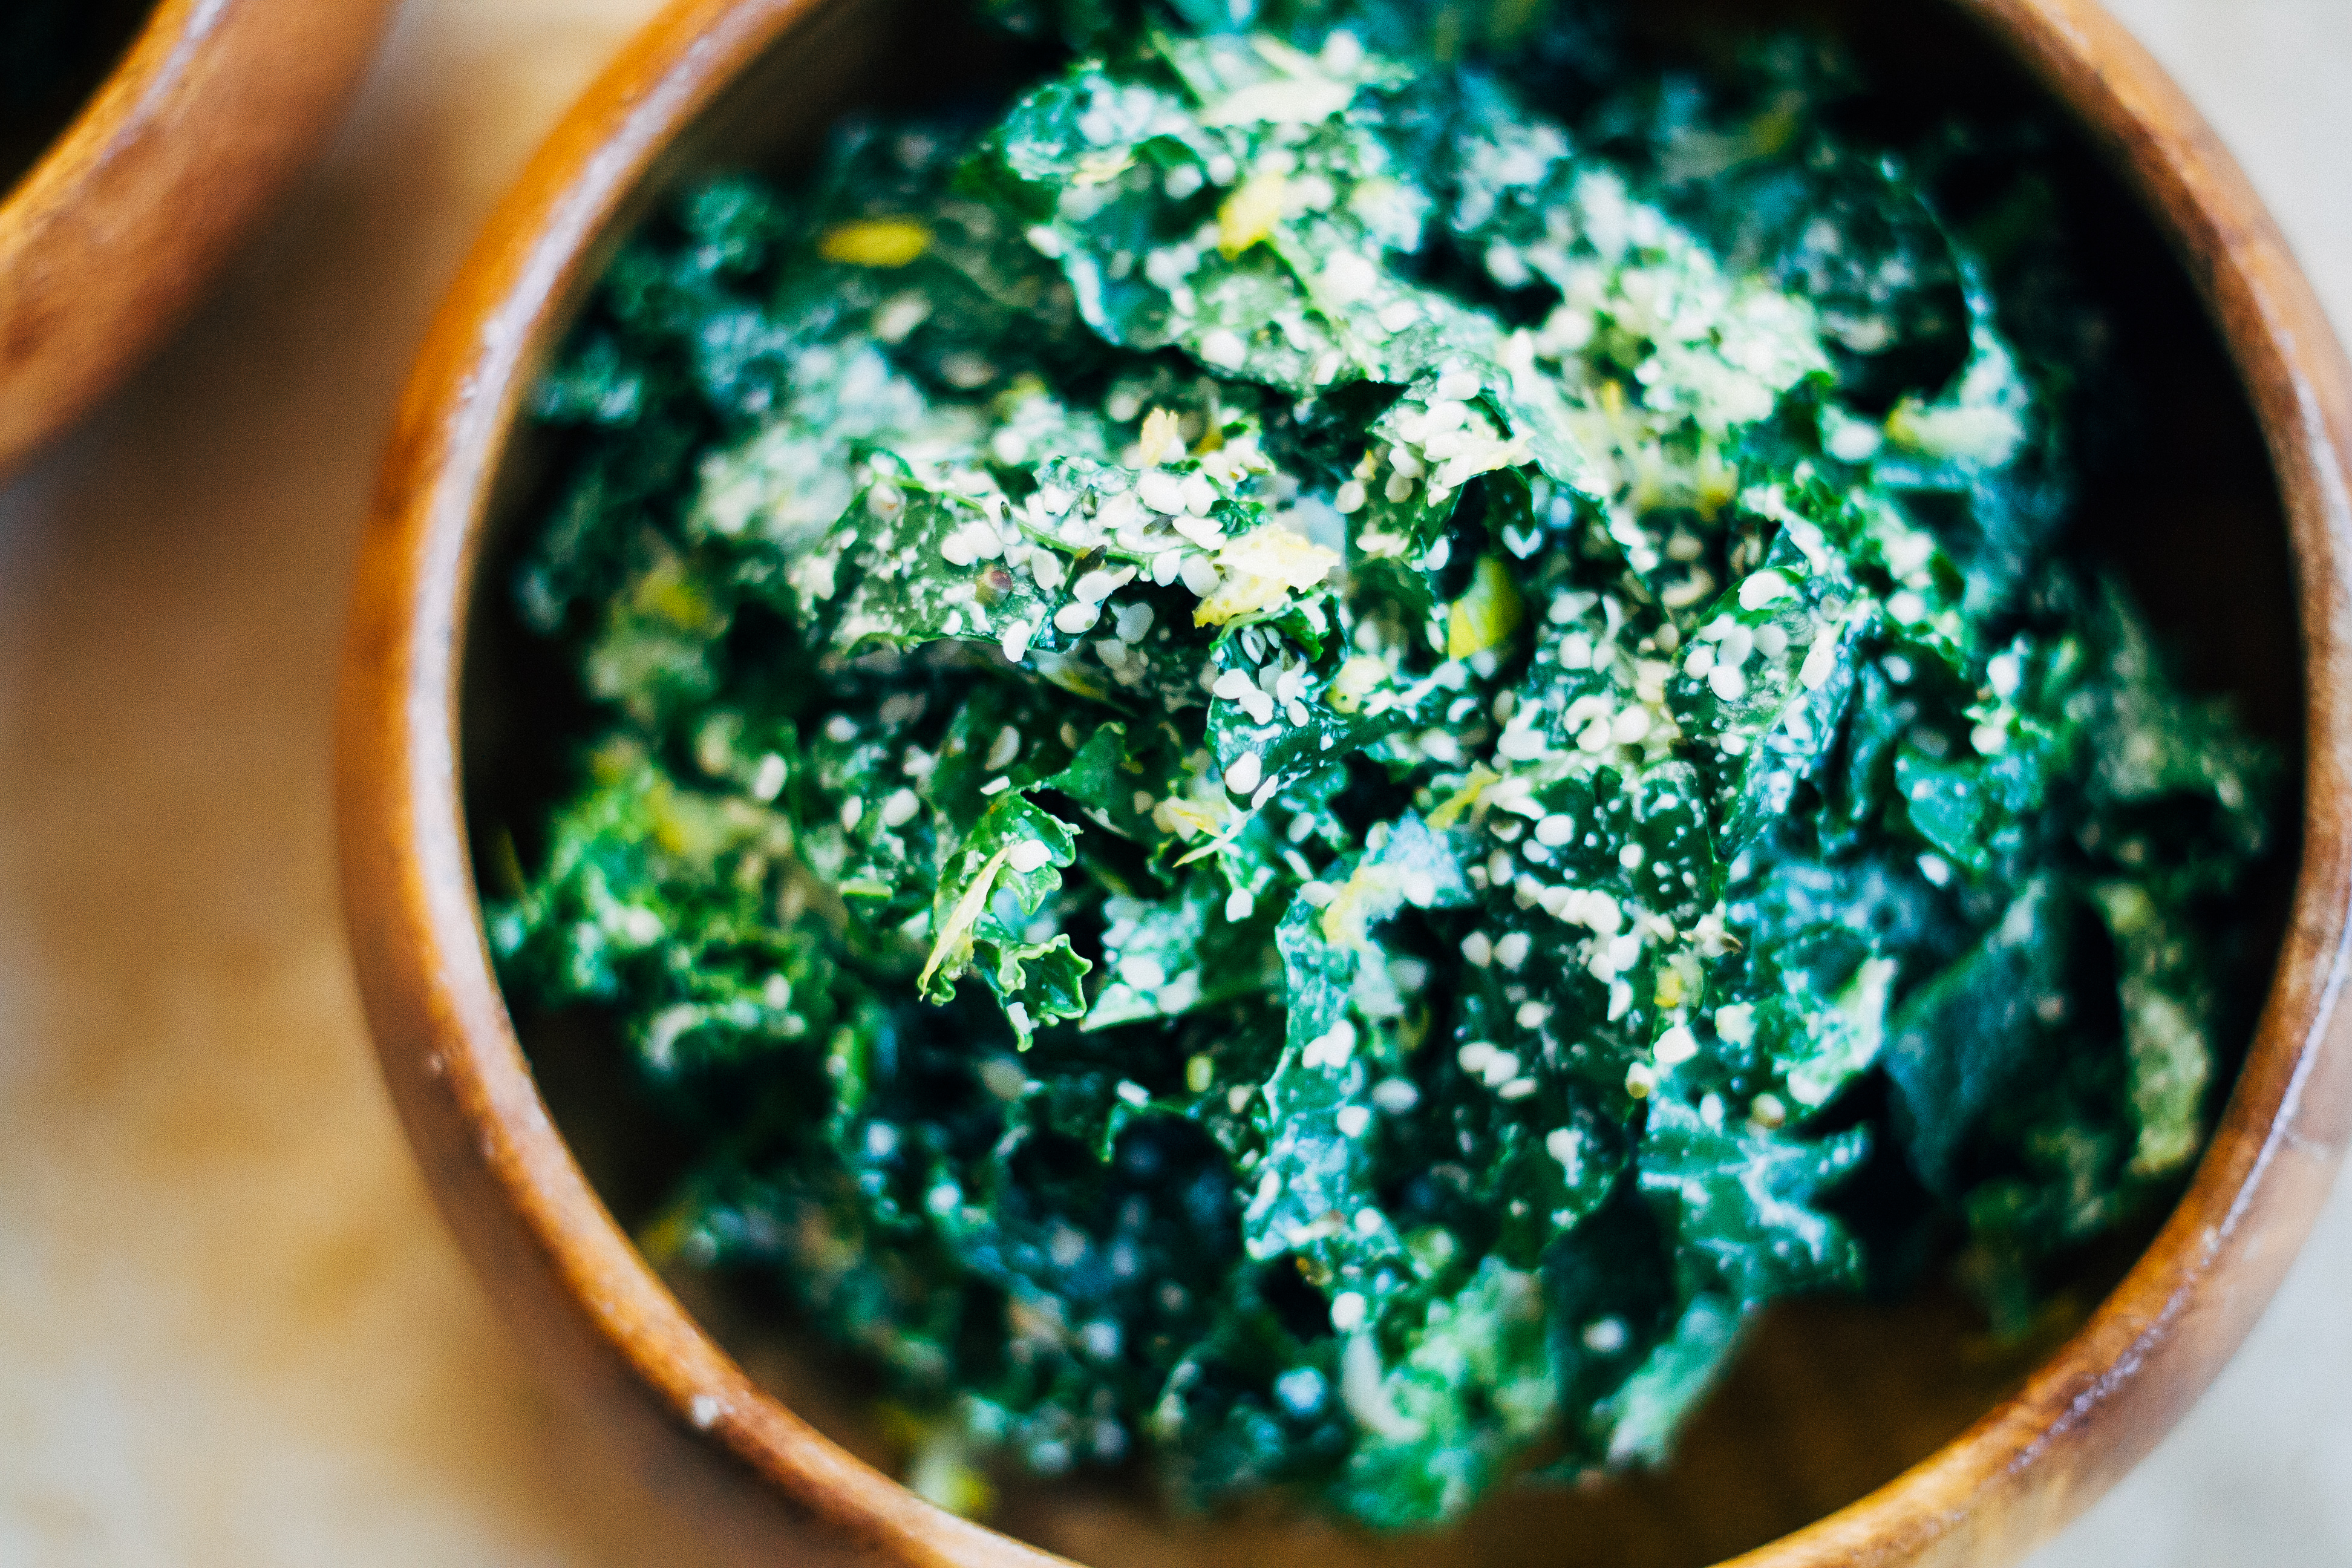 Raw Vegan Caesar Salad w/ Crunchy Hemp Seeds | Well and Full | #vegan #plantbased #recipe